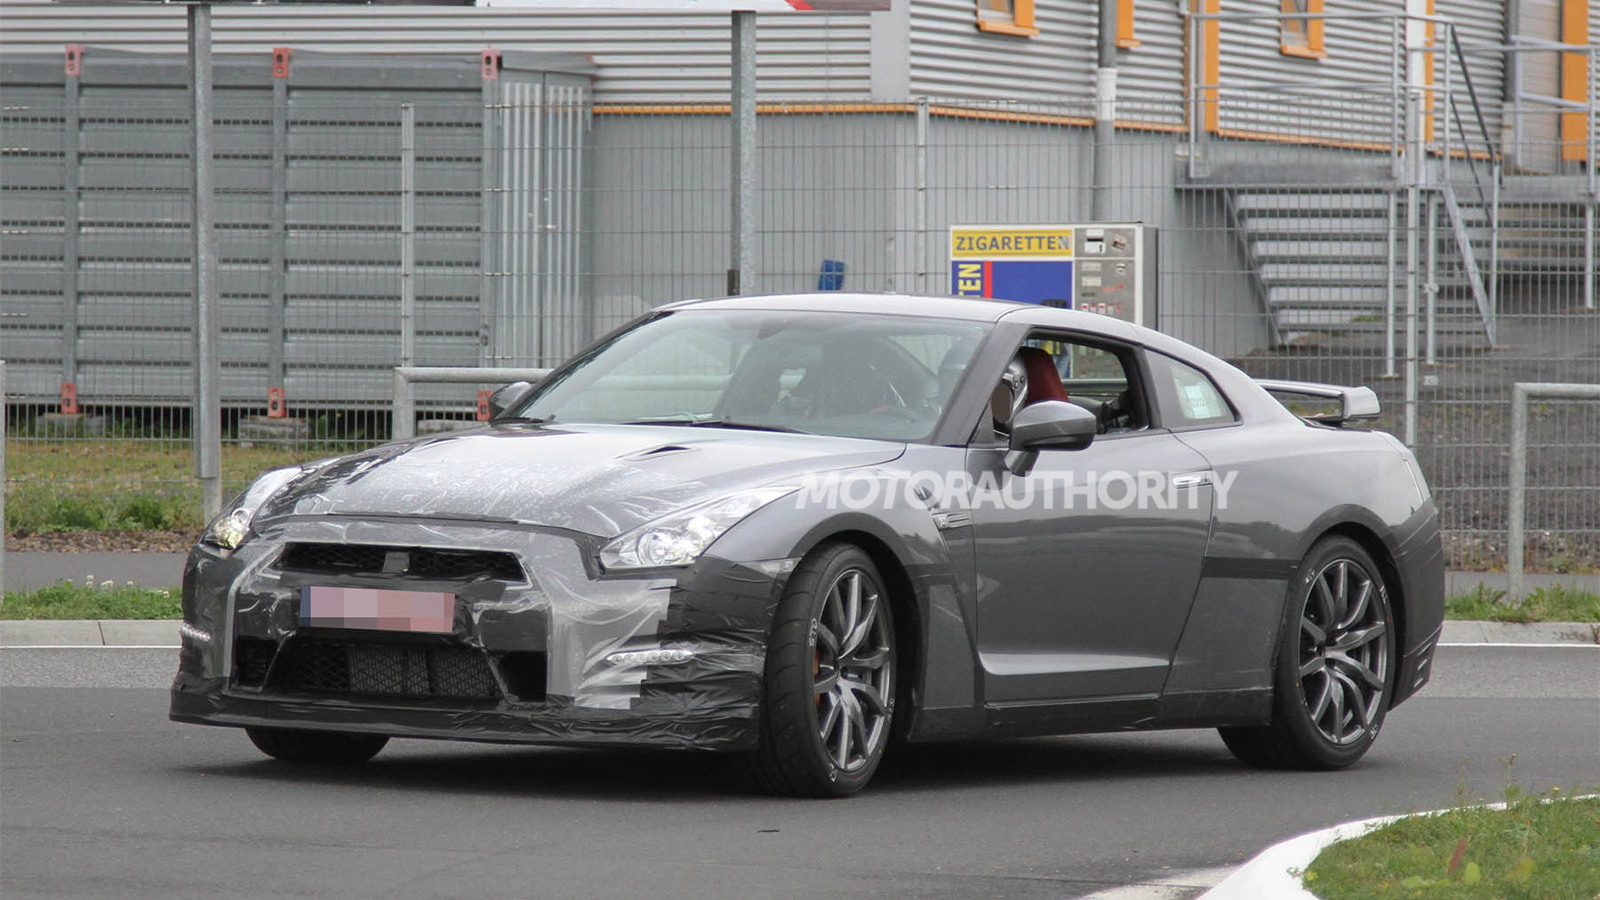 2014 Nissan GT-R spy shots